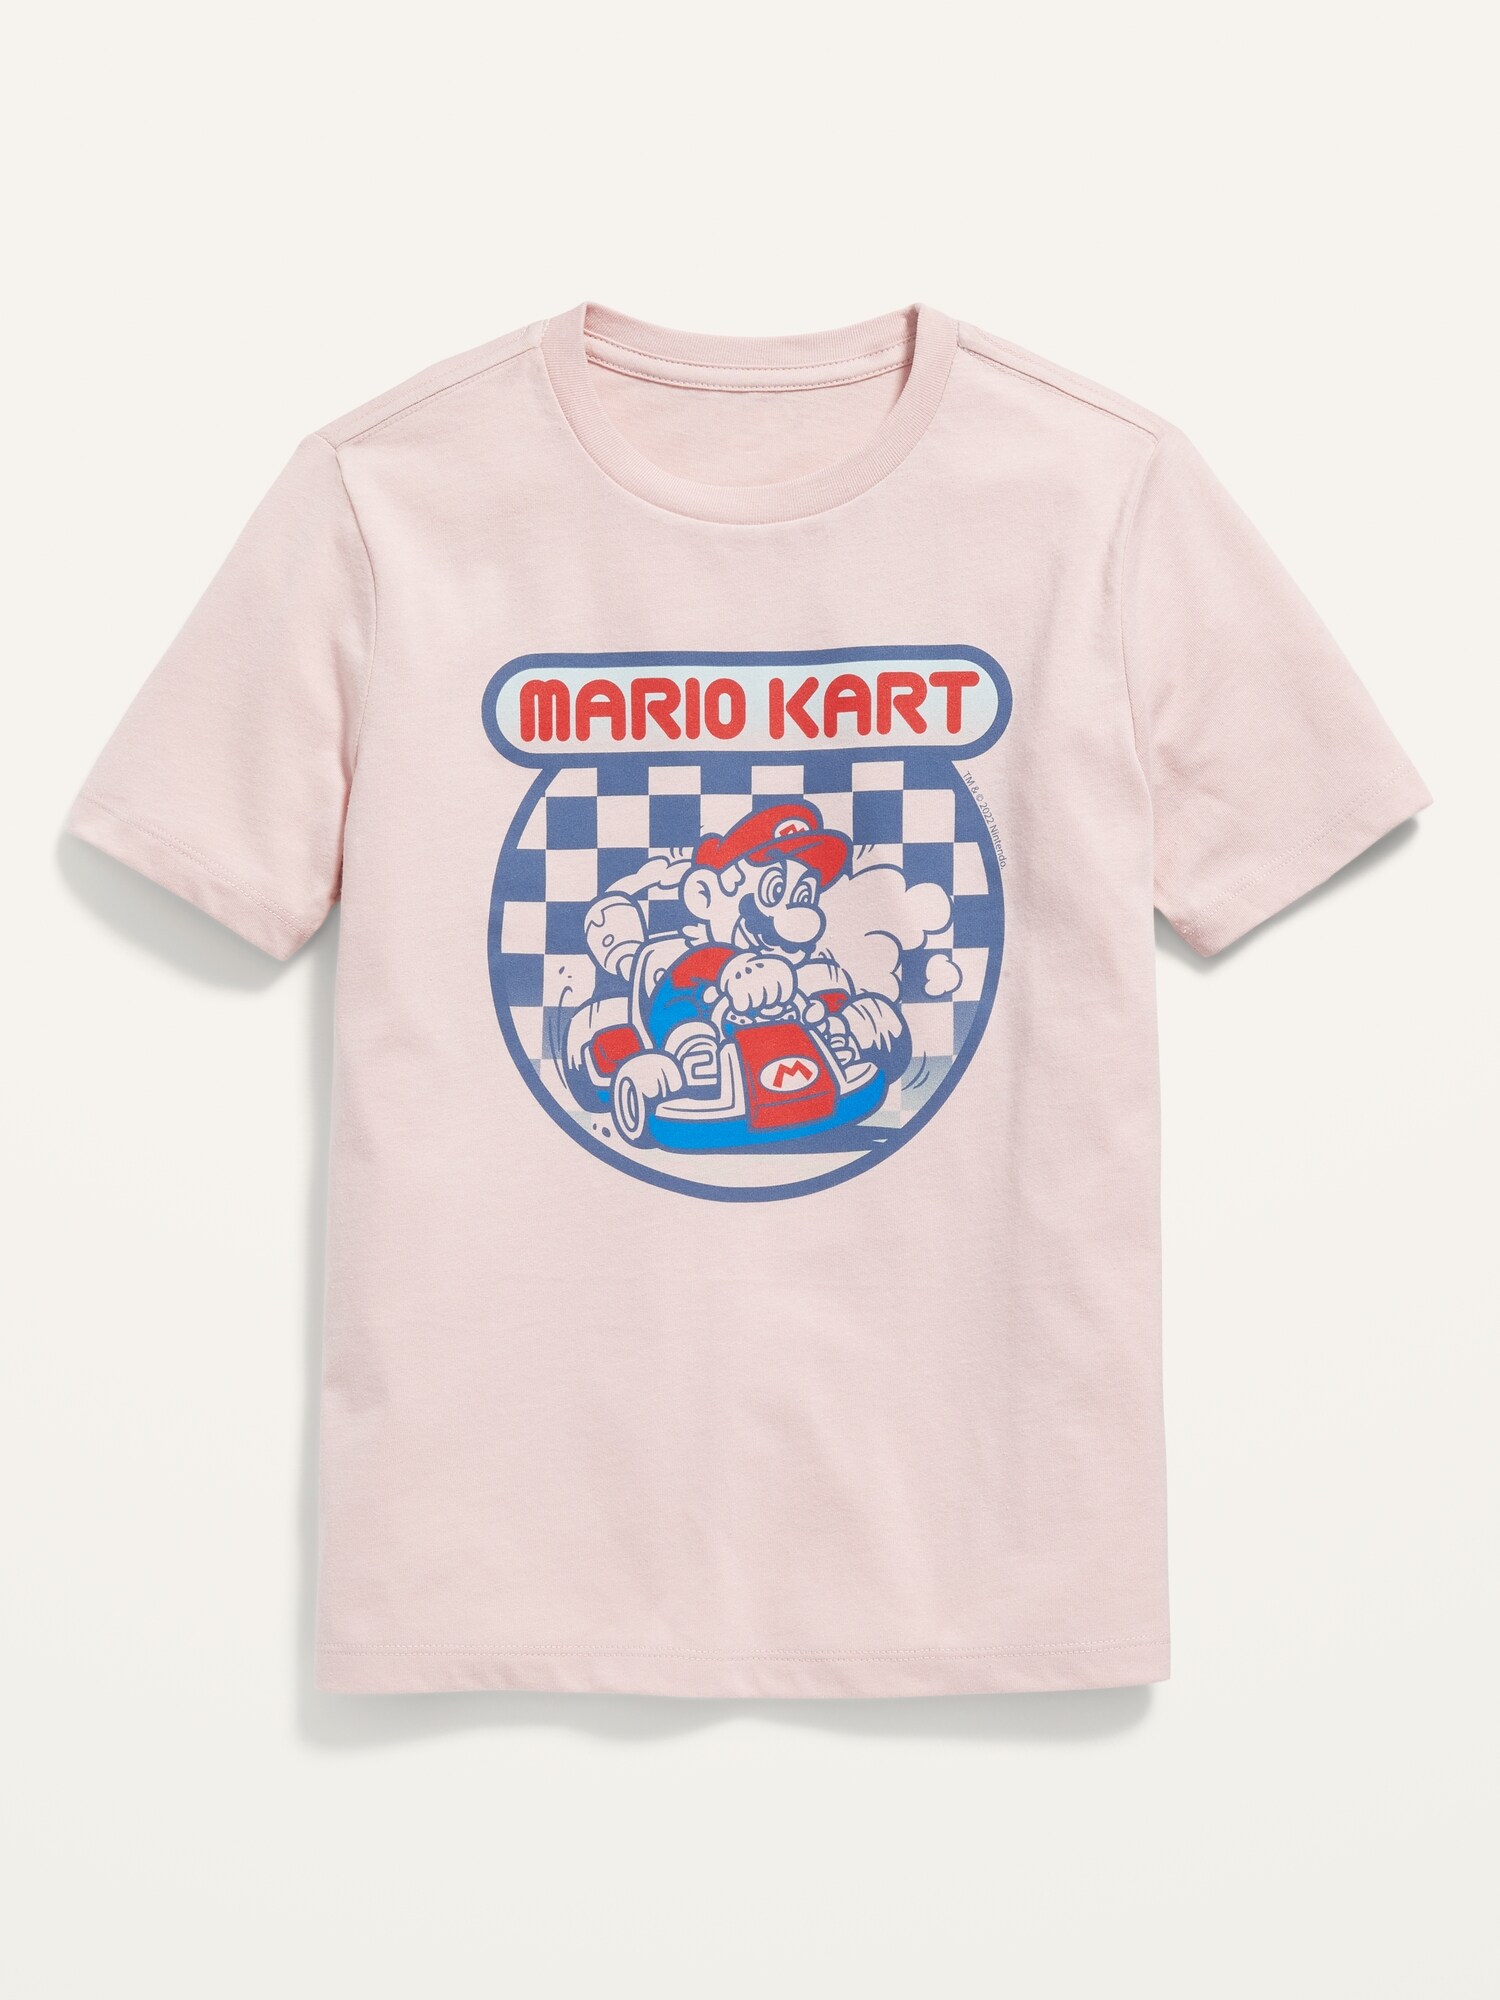 Mario Kart™ Gender-Neutral Graphic T-Shirt for Kids | Old Navy